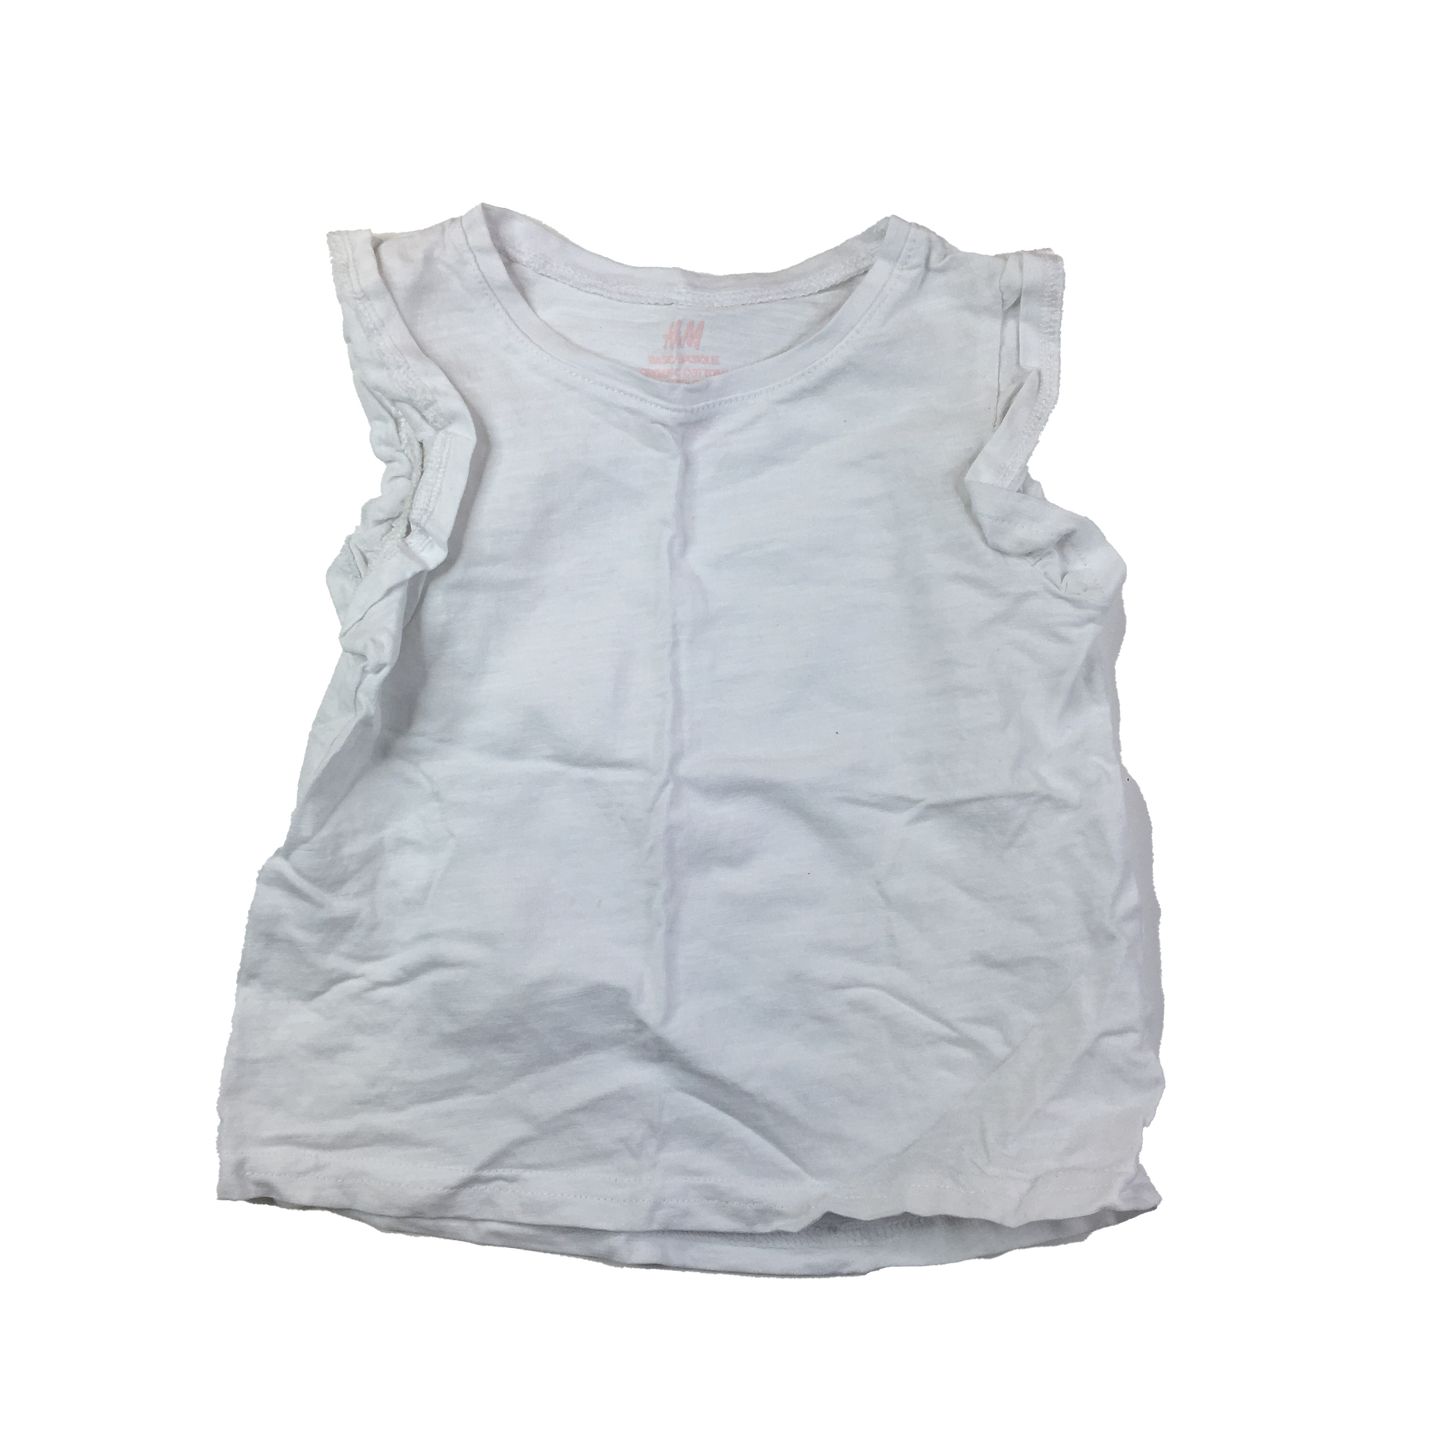 H&M White T-Shirt Ruffled Cap Sleeve 2T